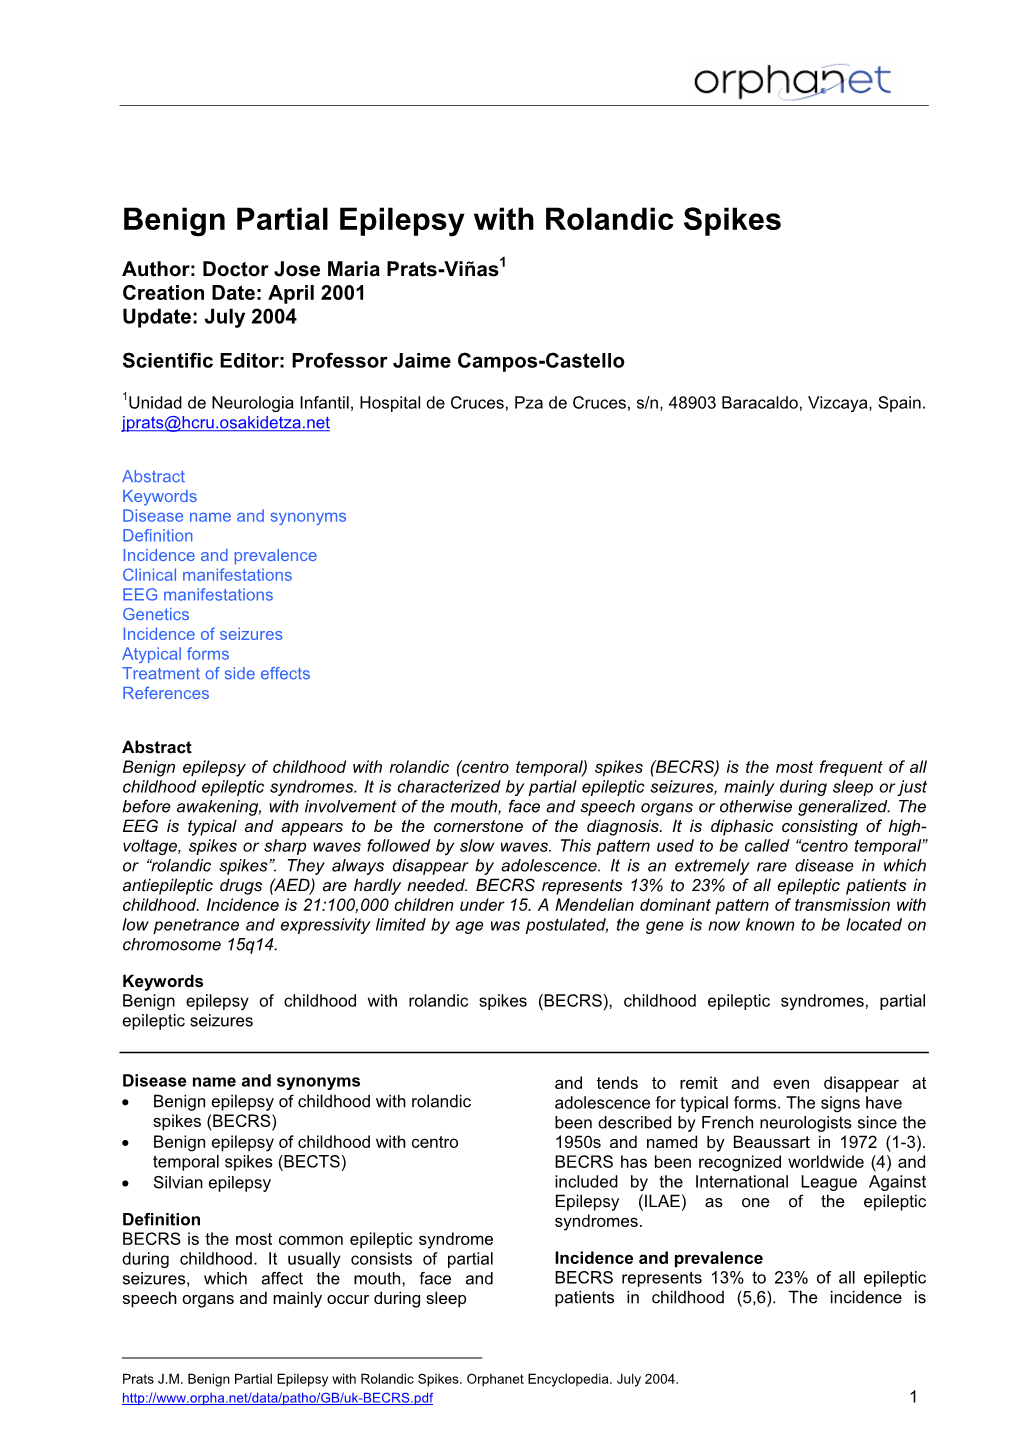 Benign Partial Epilepsy with Rolandic Spikes